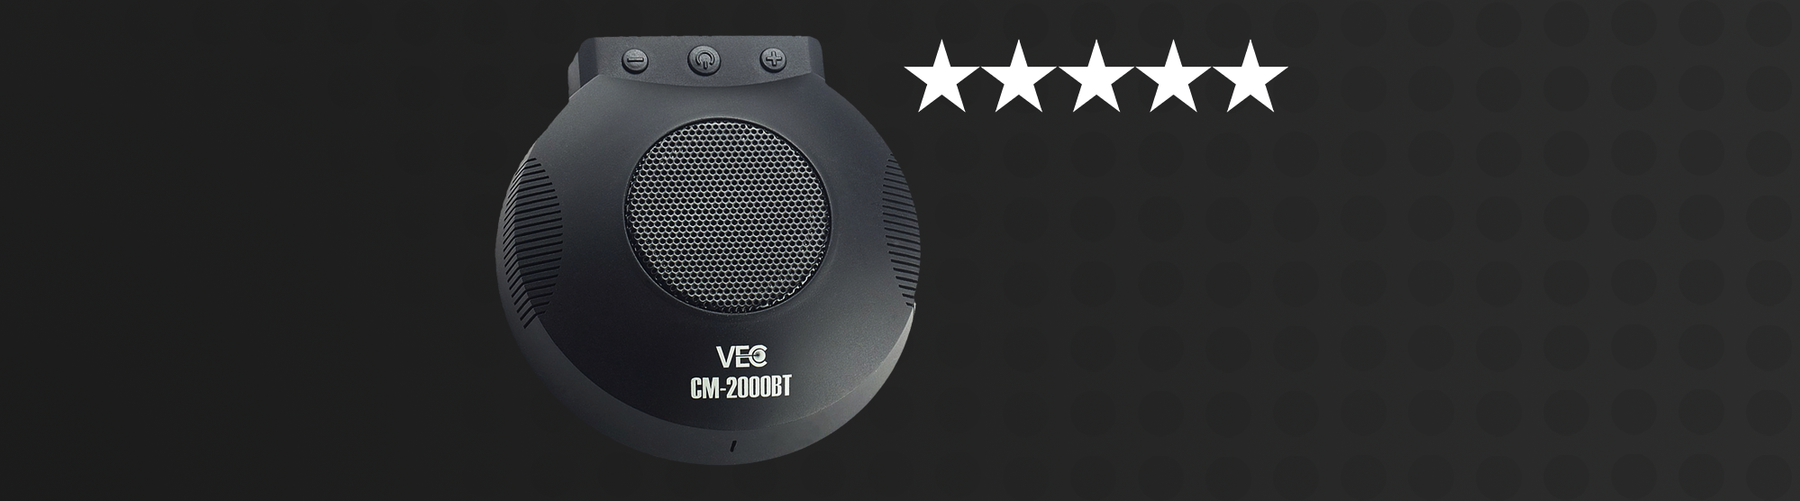 CM-2000-BT  Desktop Conference Speakerphone/Microphone Product Review